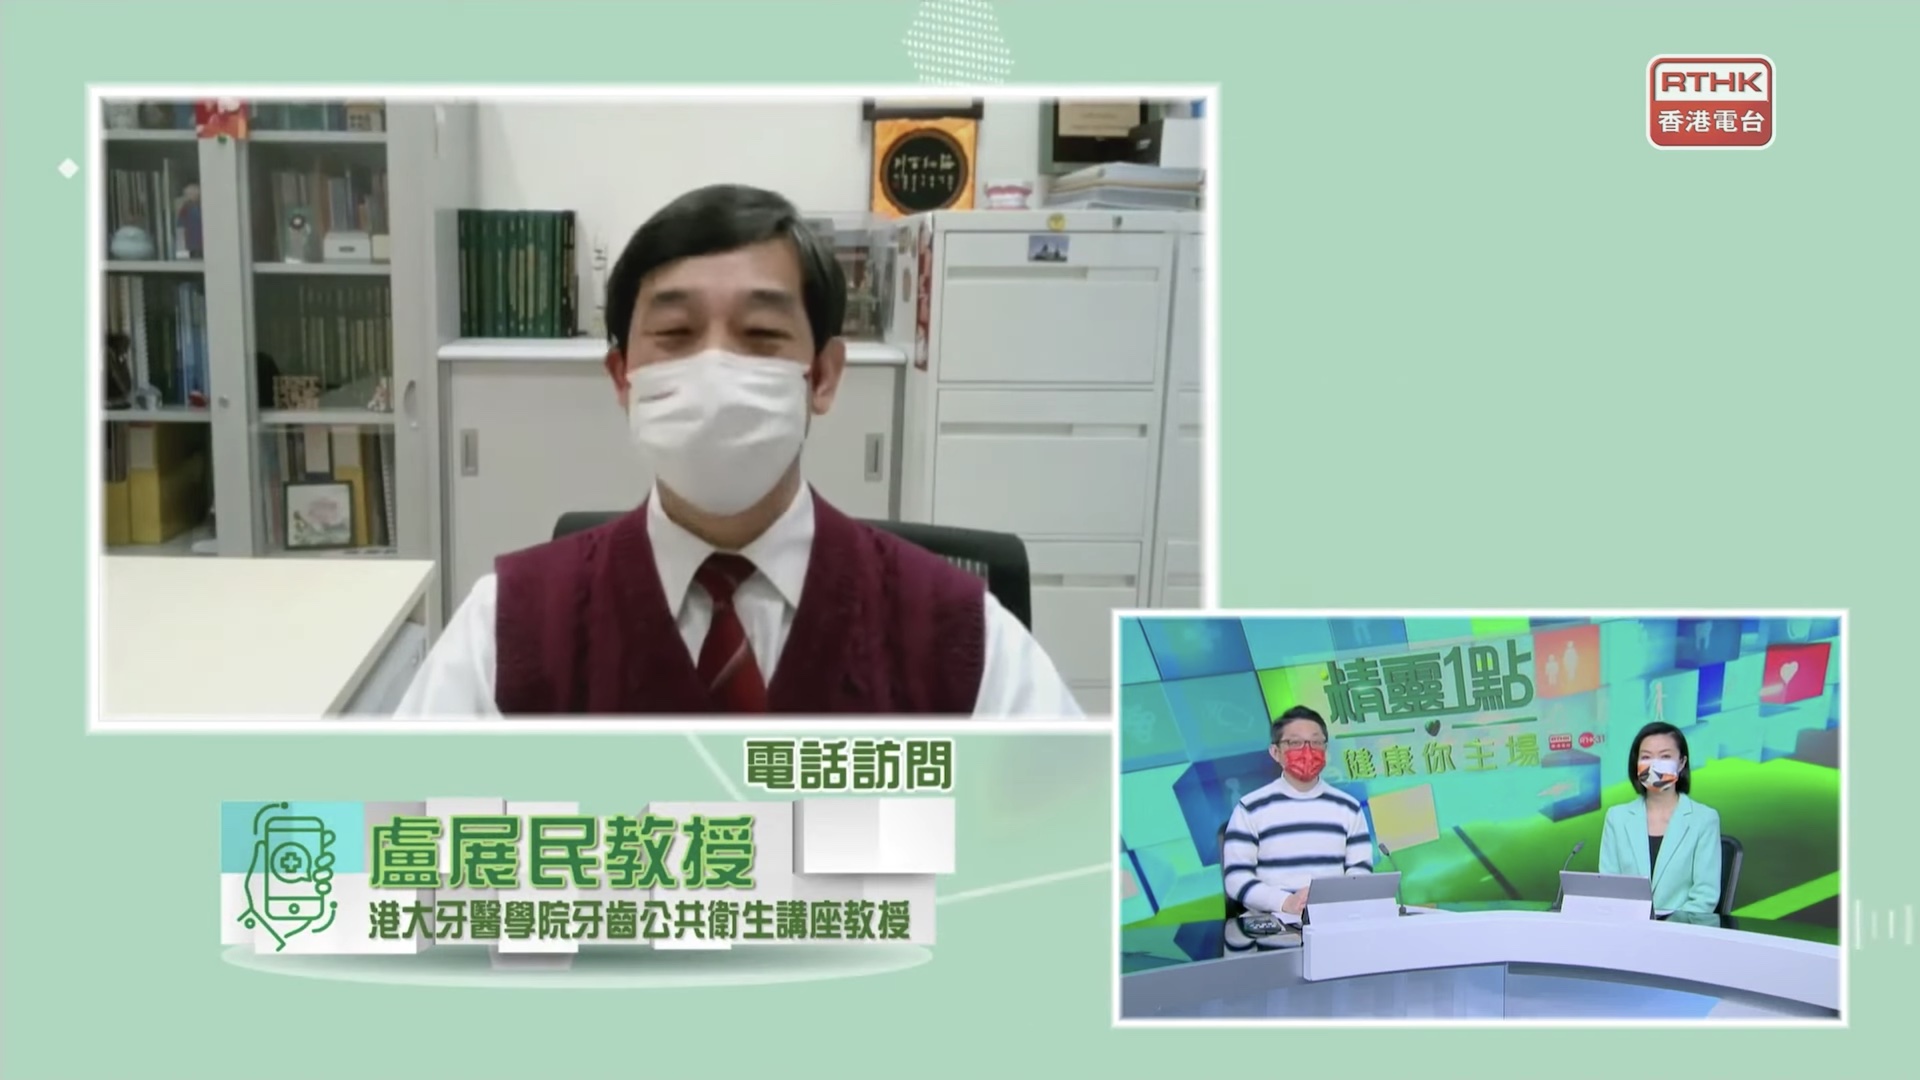 RTHK 31【精靈一點】: 香港大學牙醫學院四十周年系列- 長者口腔健康與咀嚼功能 video